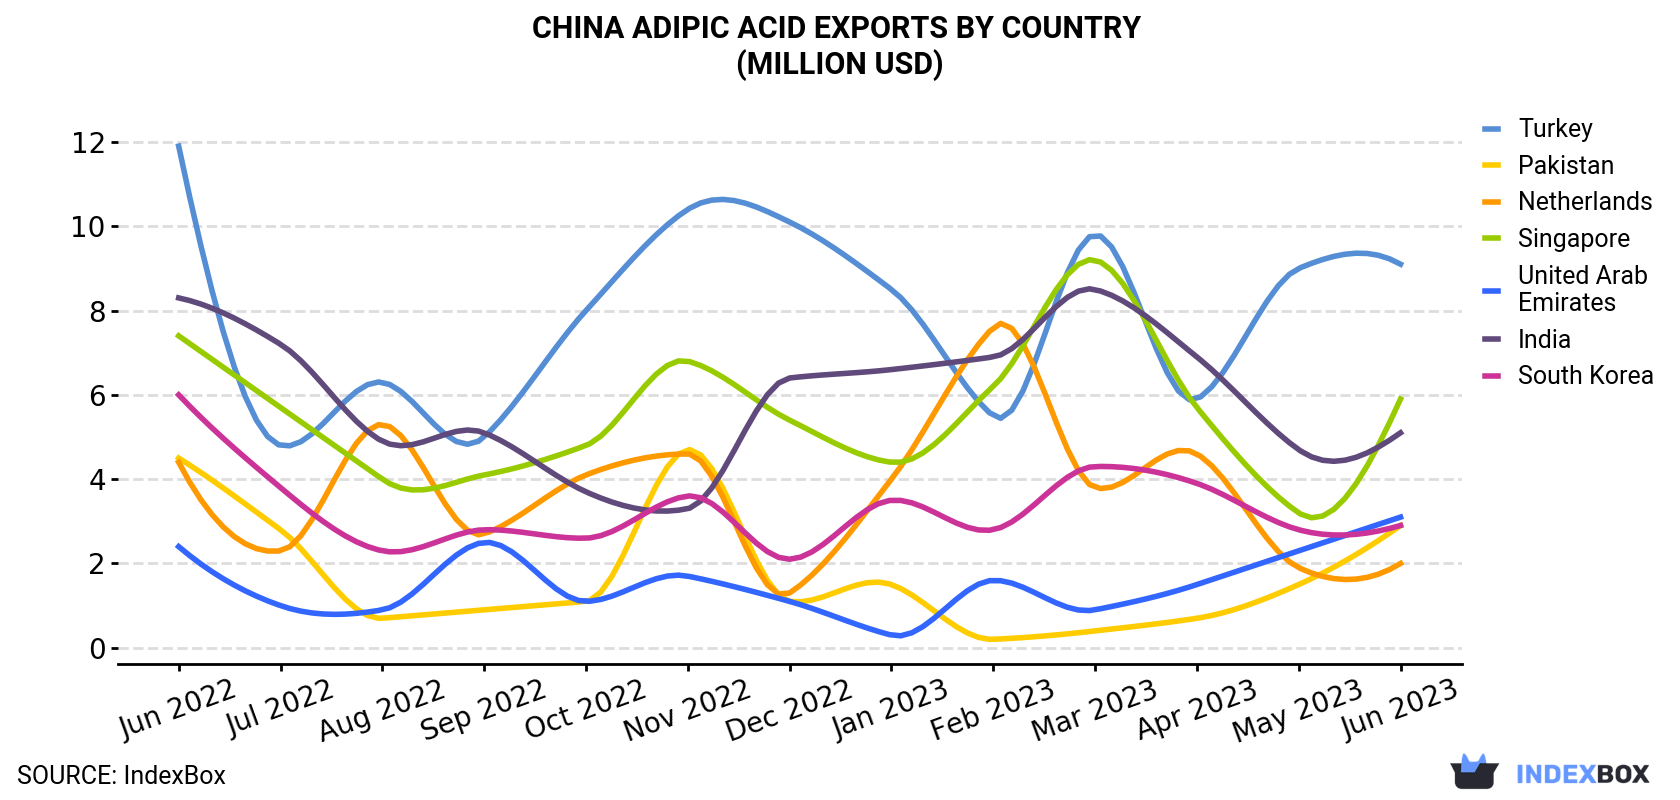 China Adipic Acid Exports By Country (Million USD)